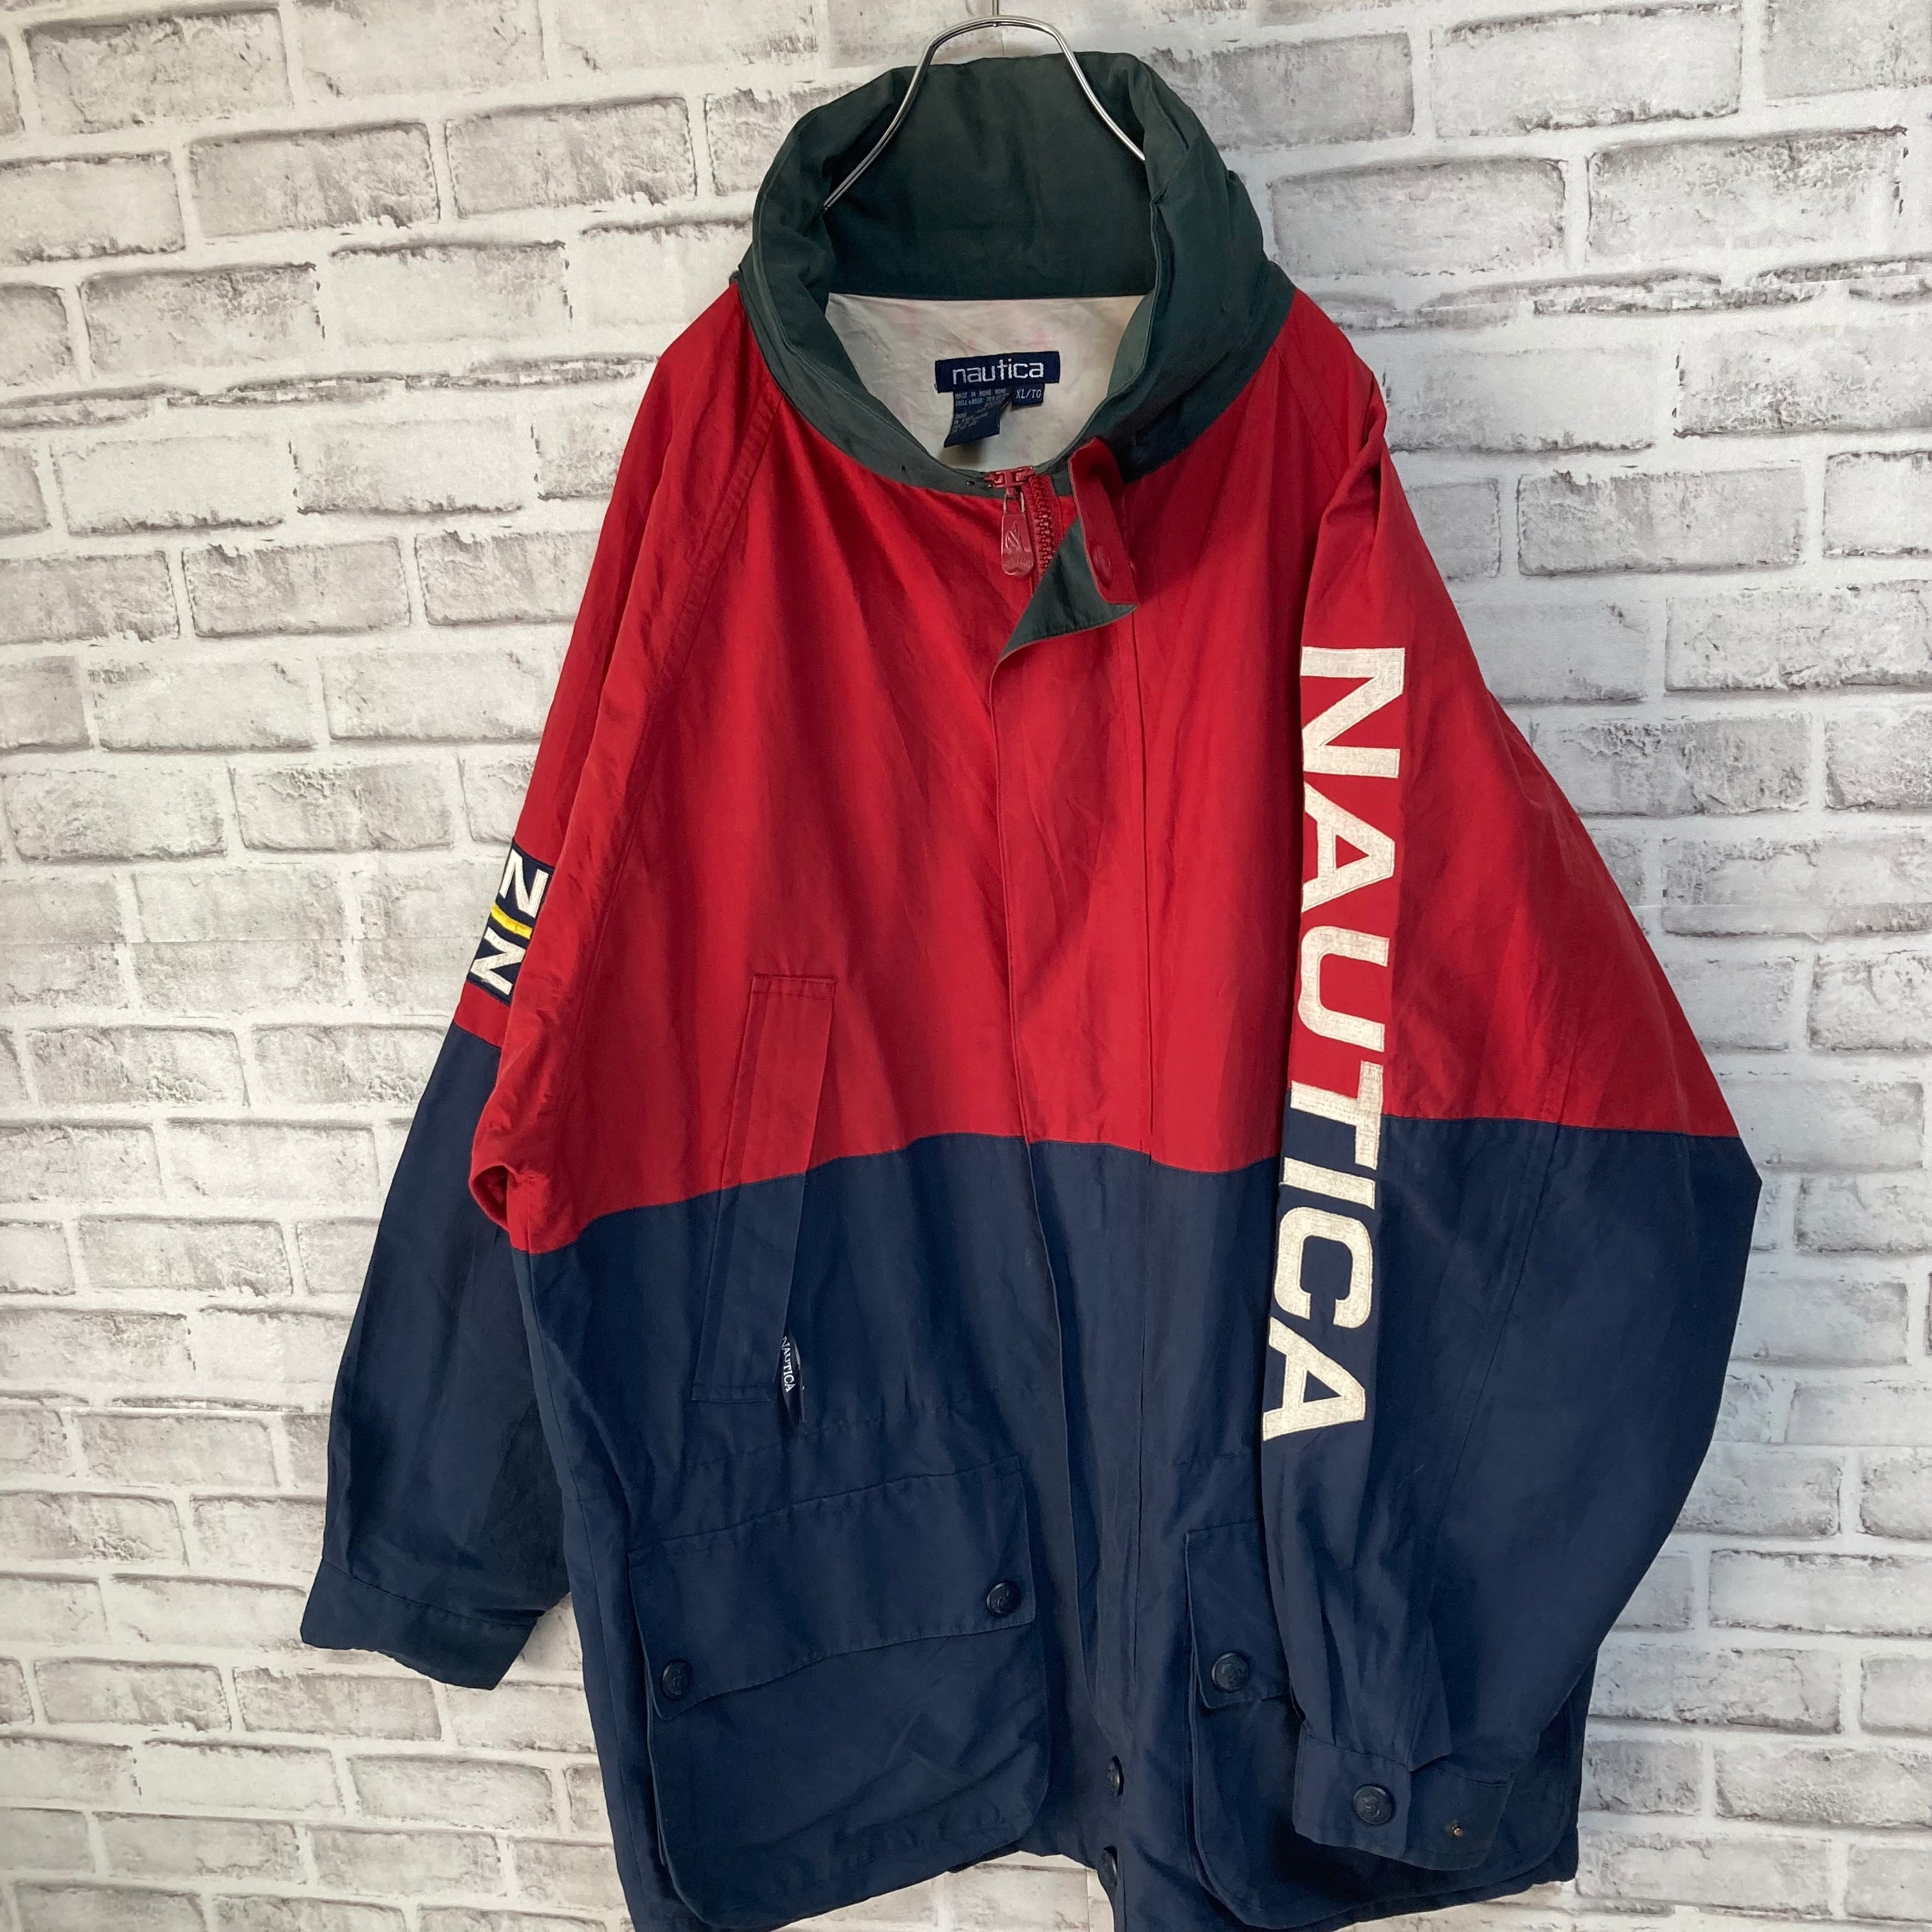 【nautica】Nylon Jacket XL 90s “Old nautica”ノーティカ ナイロンジャケット 刺繍ロゴ 袖ロゴ アウター  アメリカ USA 古着